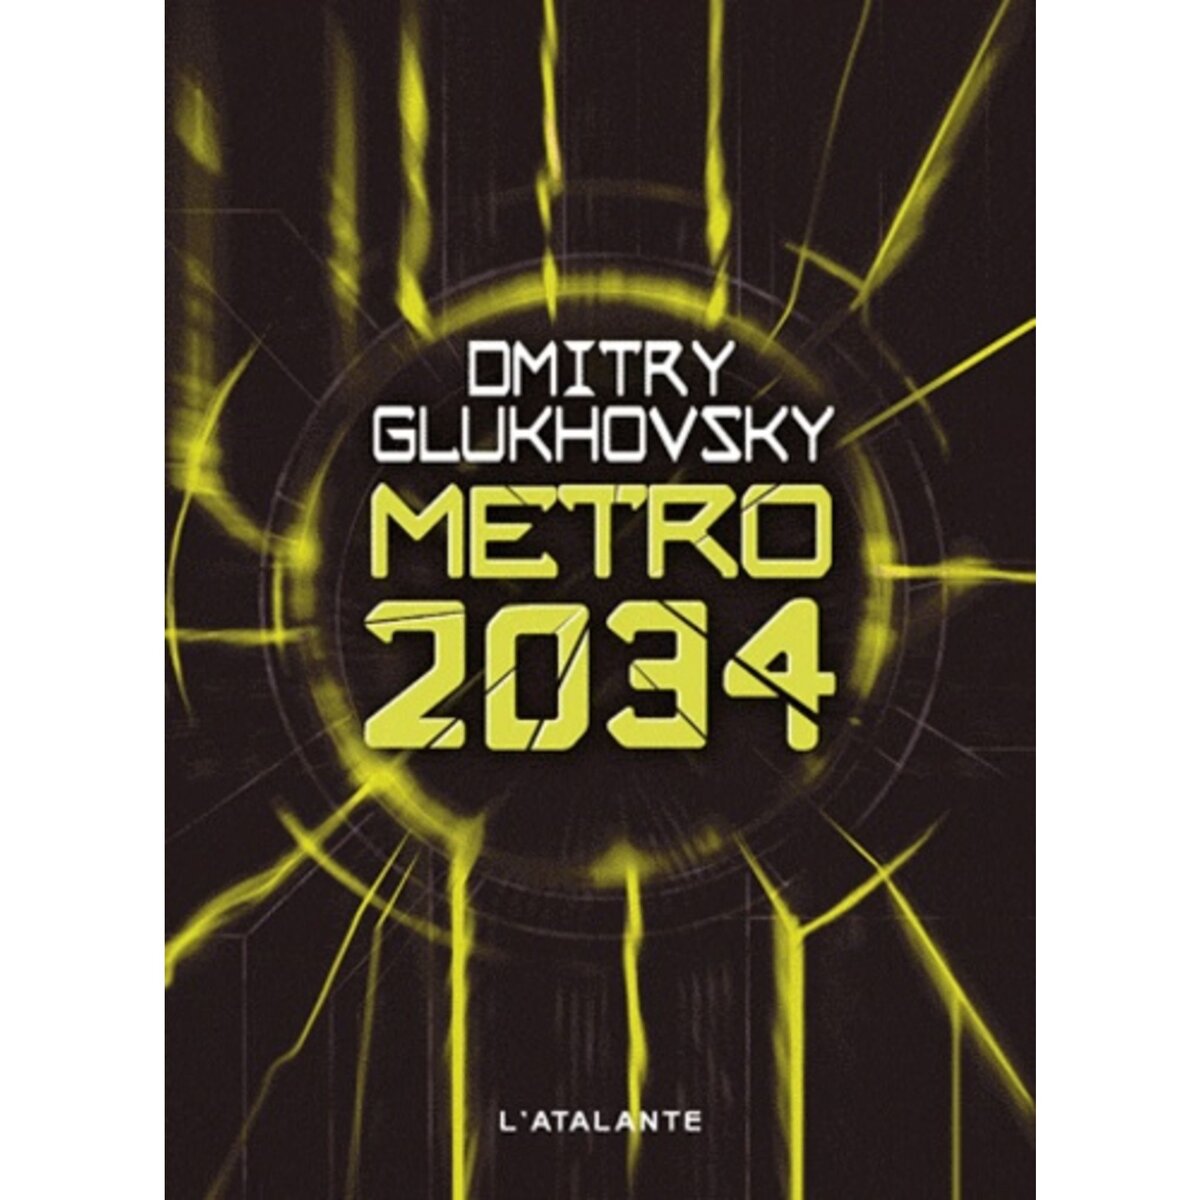  Métro 2034, Glukhovsky Dmitry